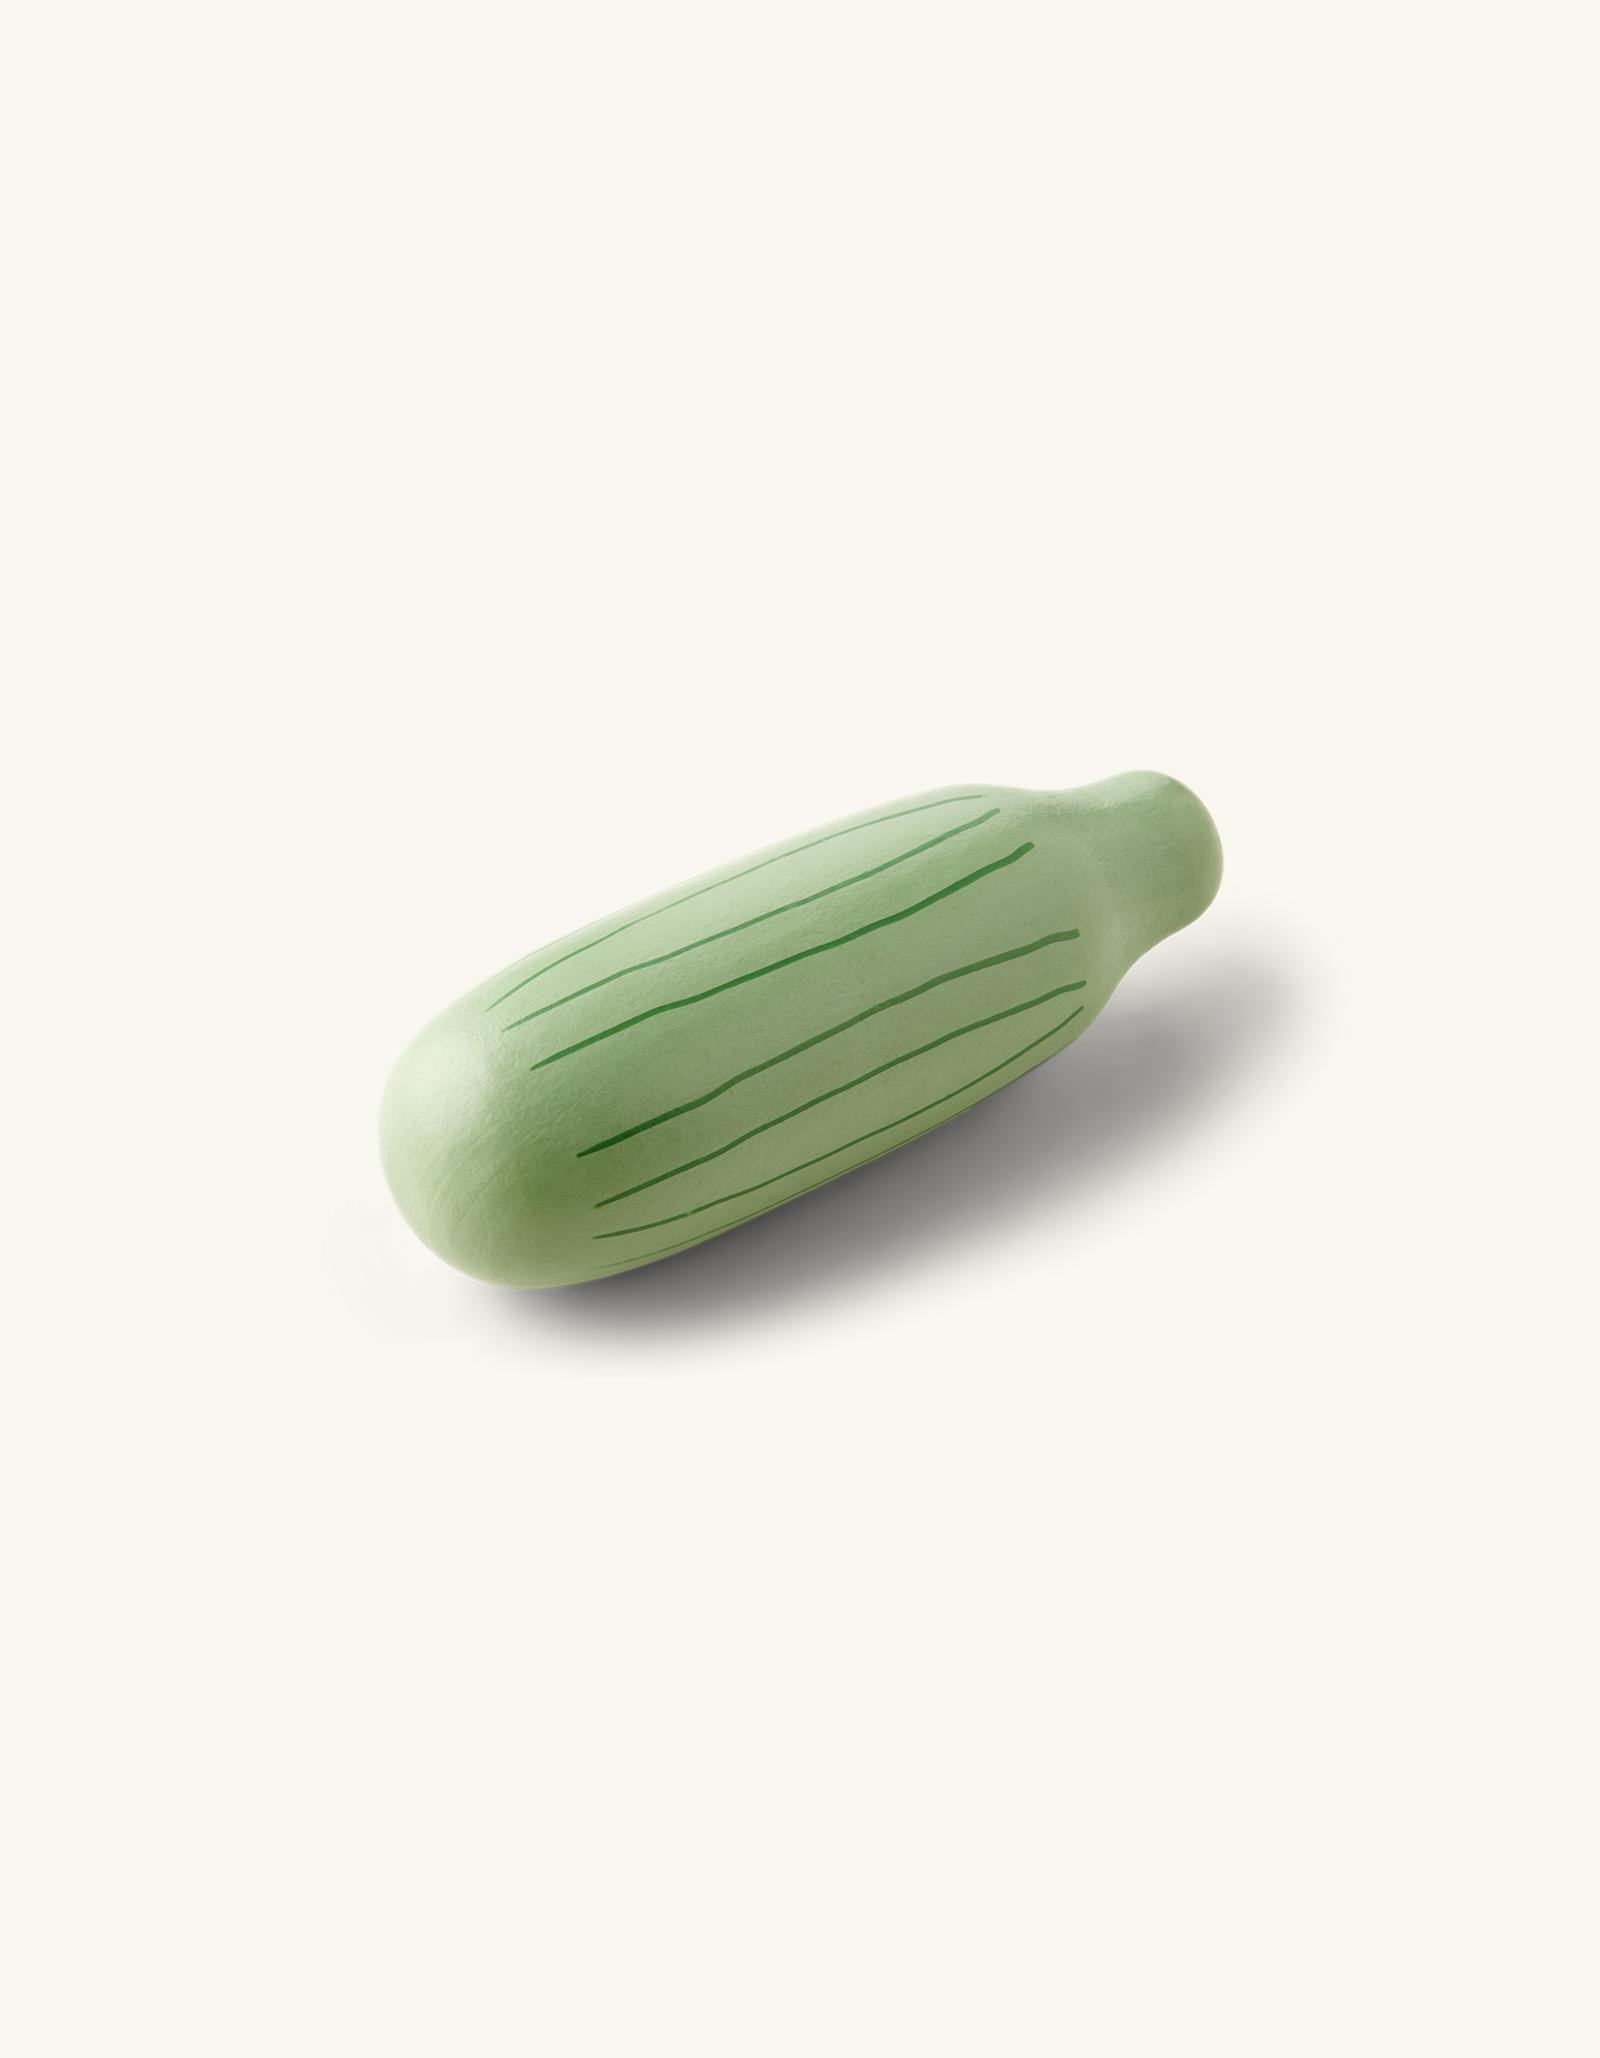 Toy Cucumber Schima Superba Søstrene Grene